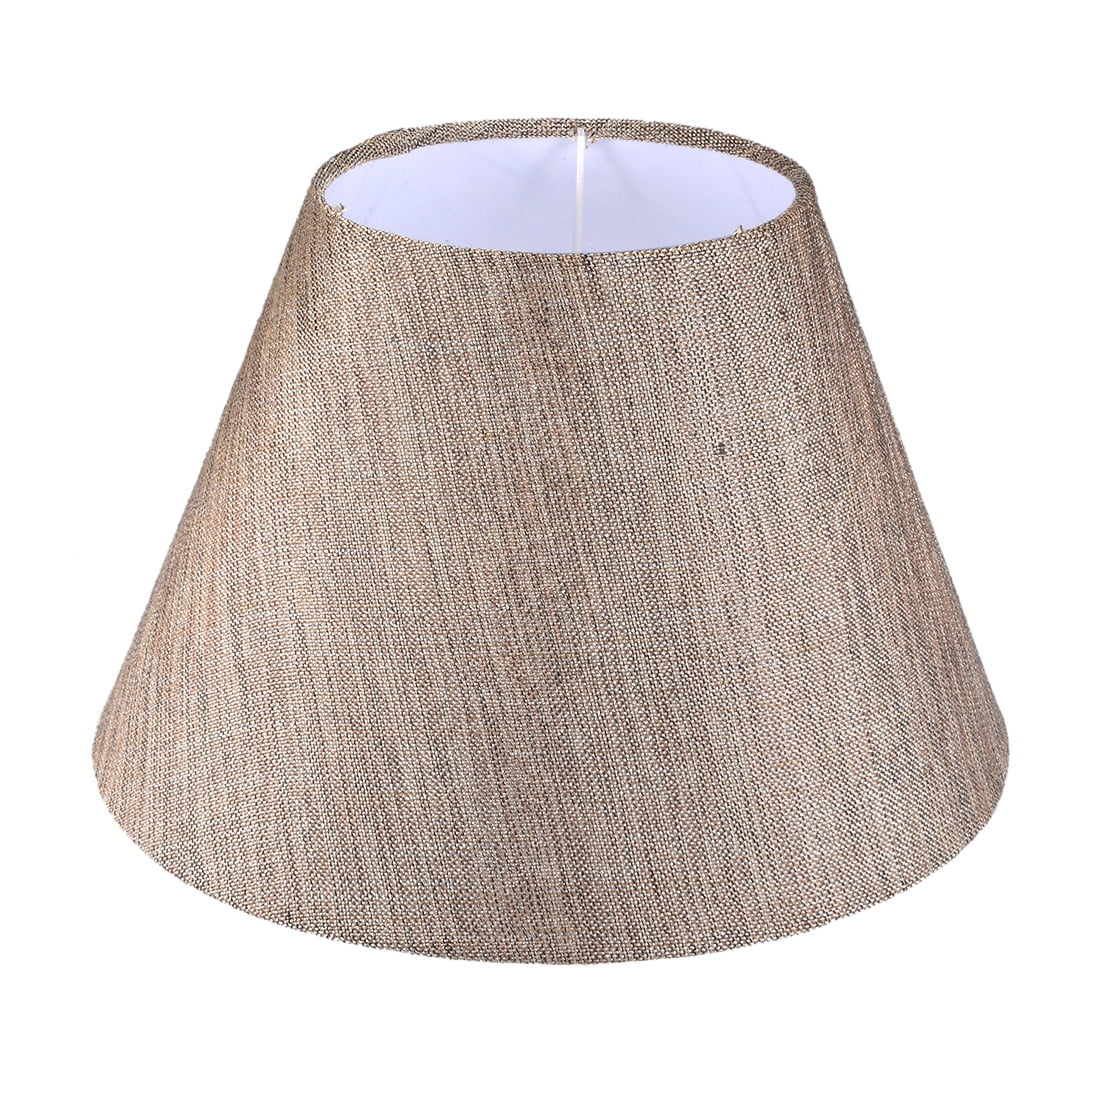 Unique Bargains Lampshades Floor Lamp Shade Light Cover 5.9x11.8x7.3